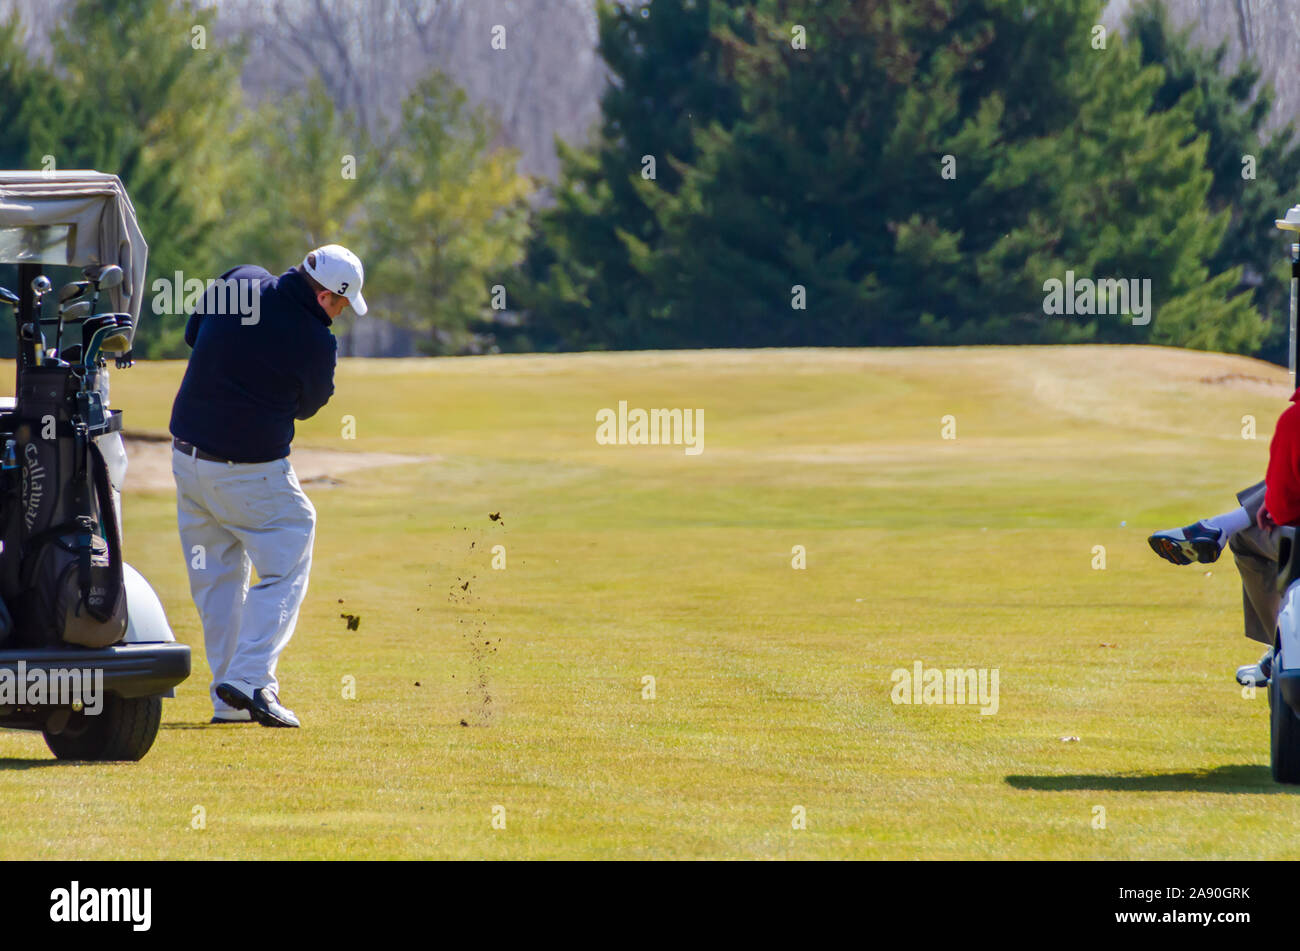 A golfer hitting a golf ball on the fairway. Stock Photo